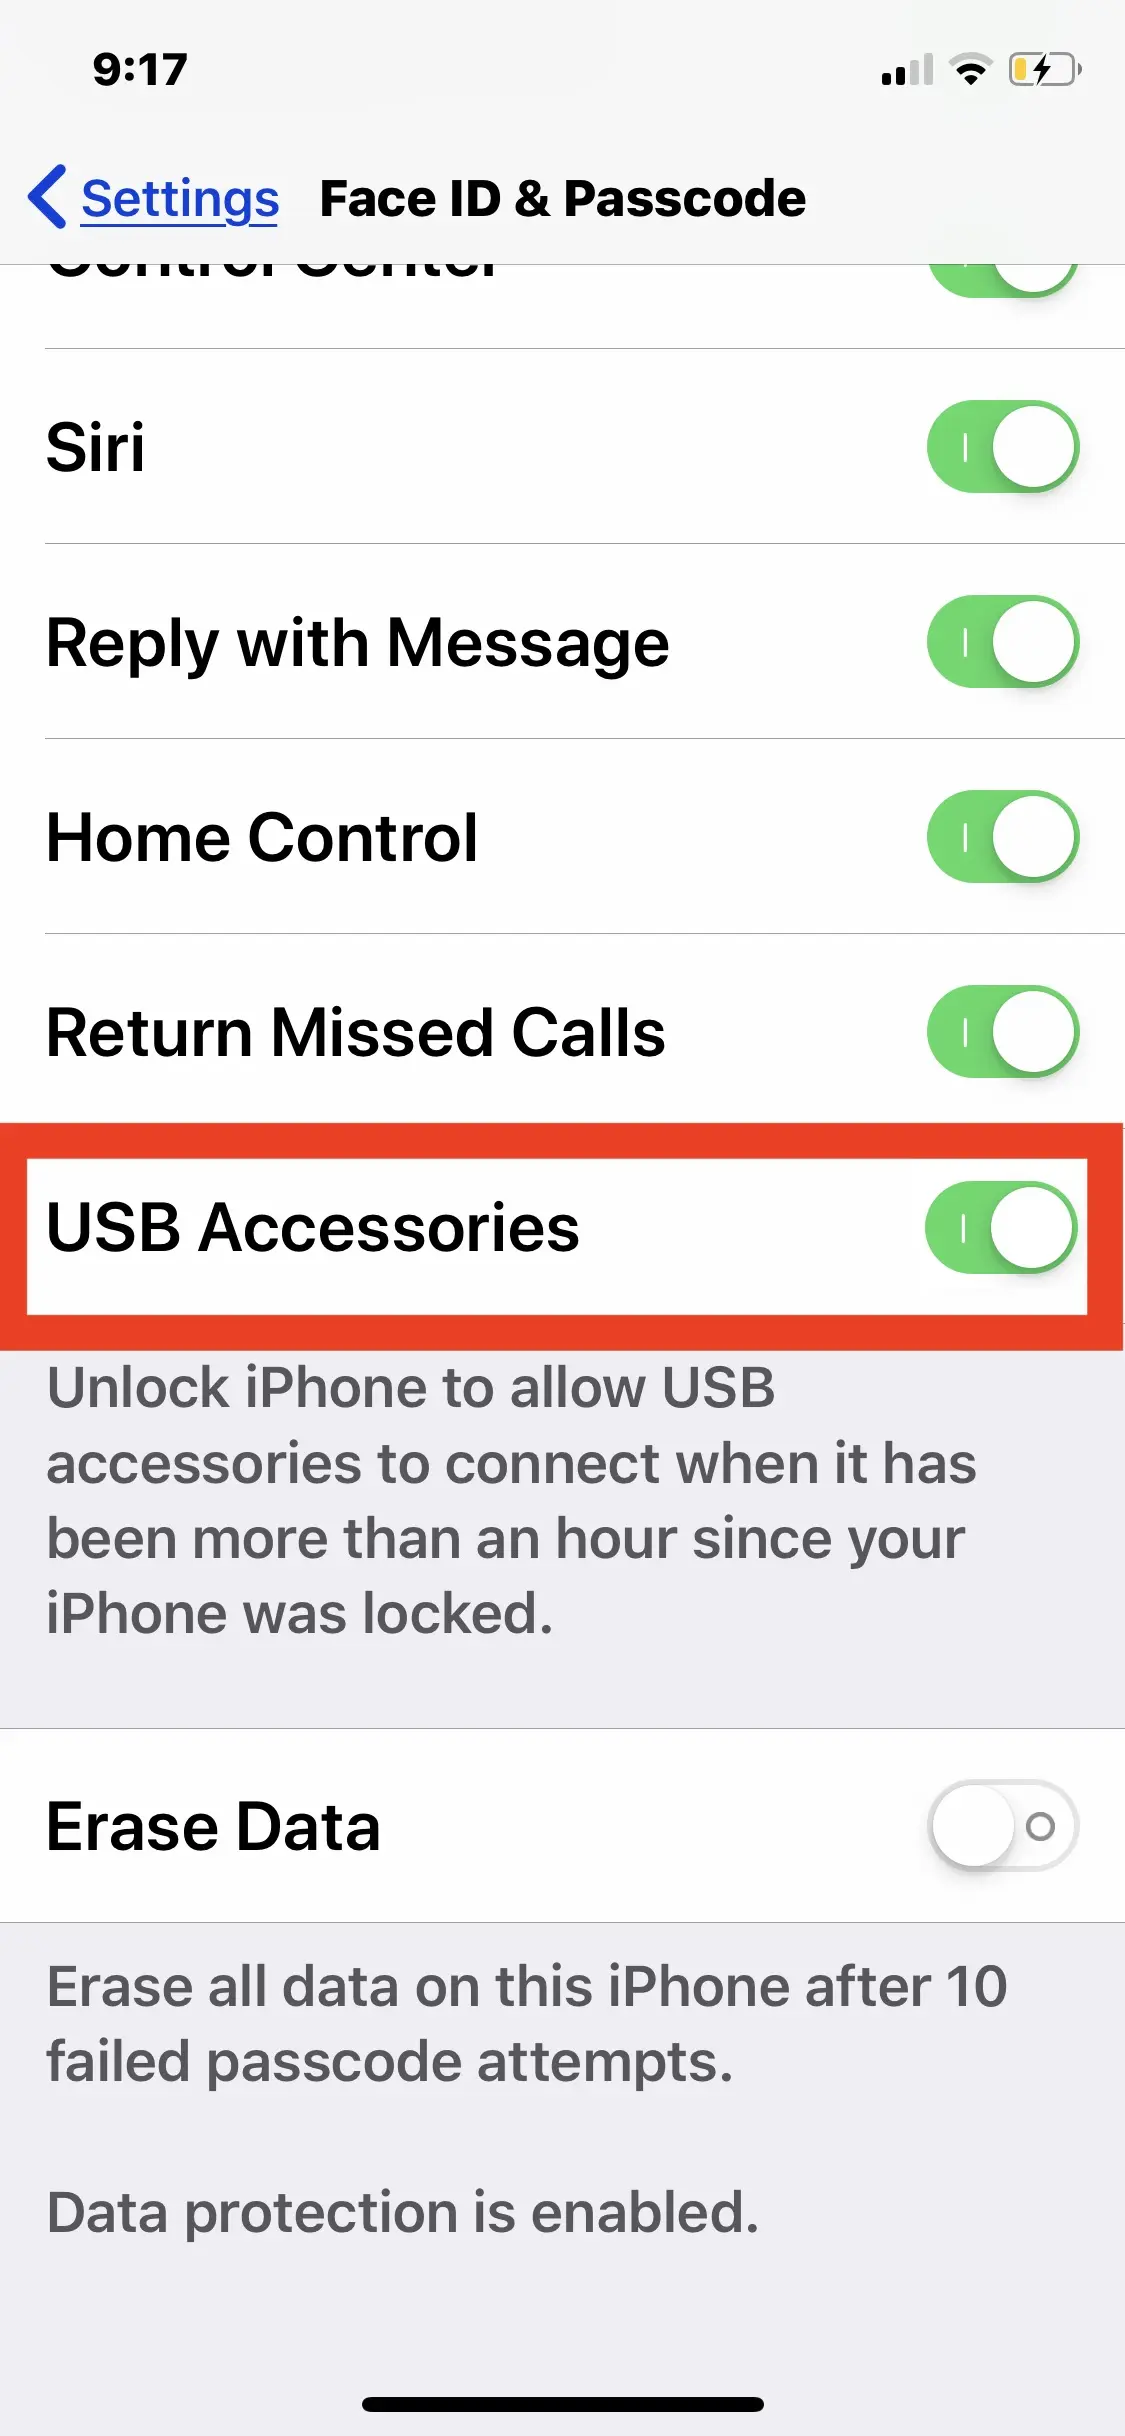 ontop.vn disable usb accessory unlock iphone message